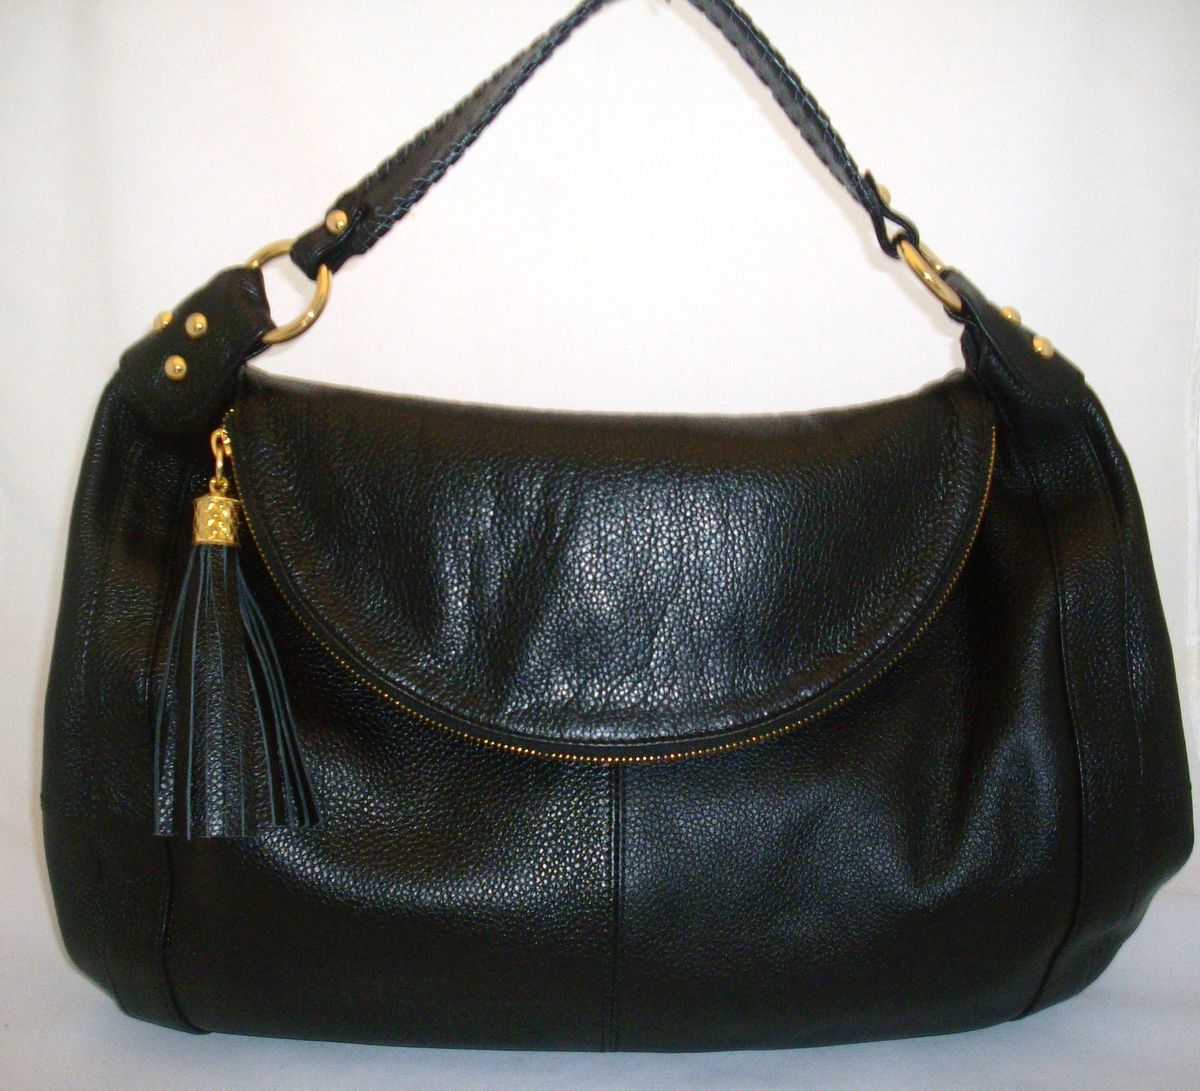 Onna Ehrlich Handbag Rachel Tassel Black Italian Leather Hobo Purse $